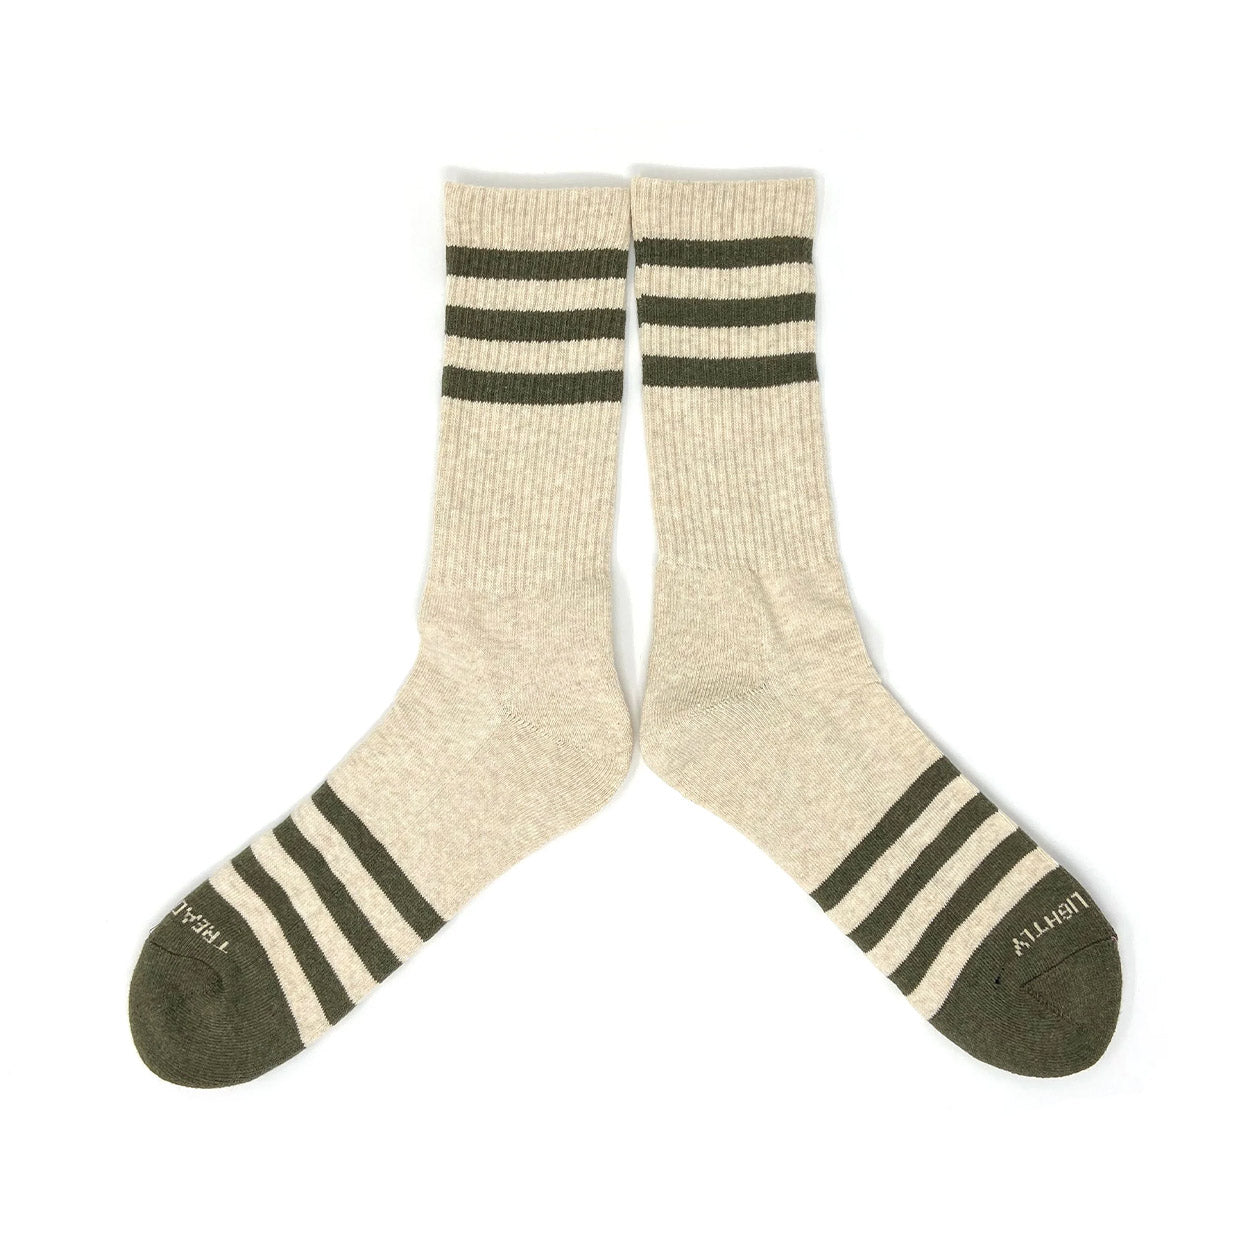 Ampal socks Heather Green